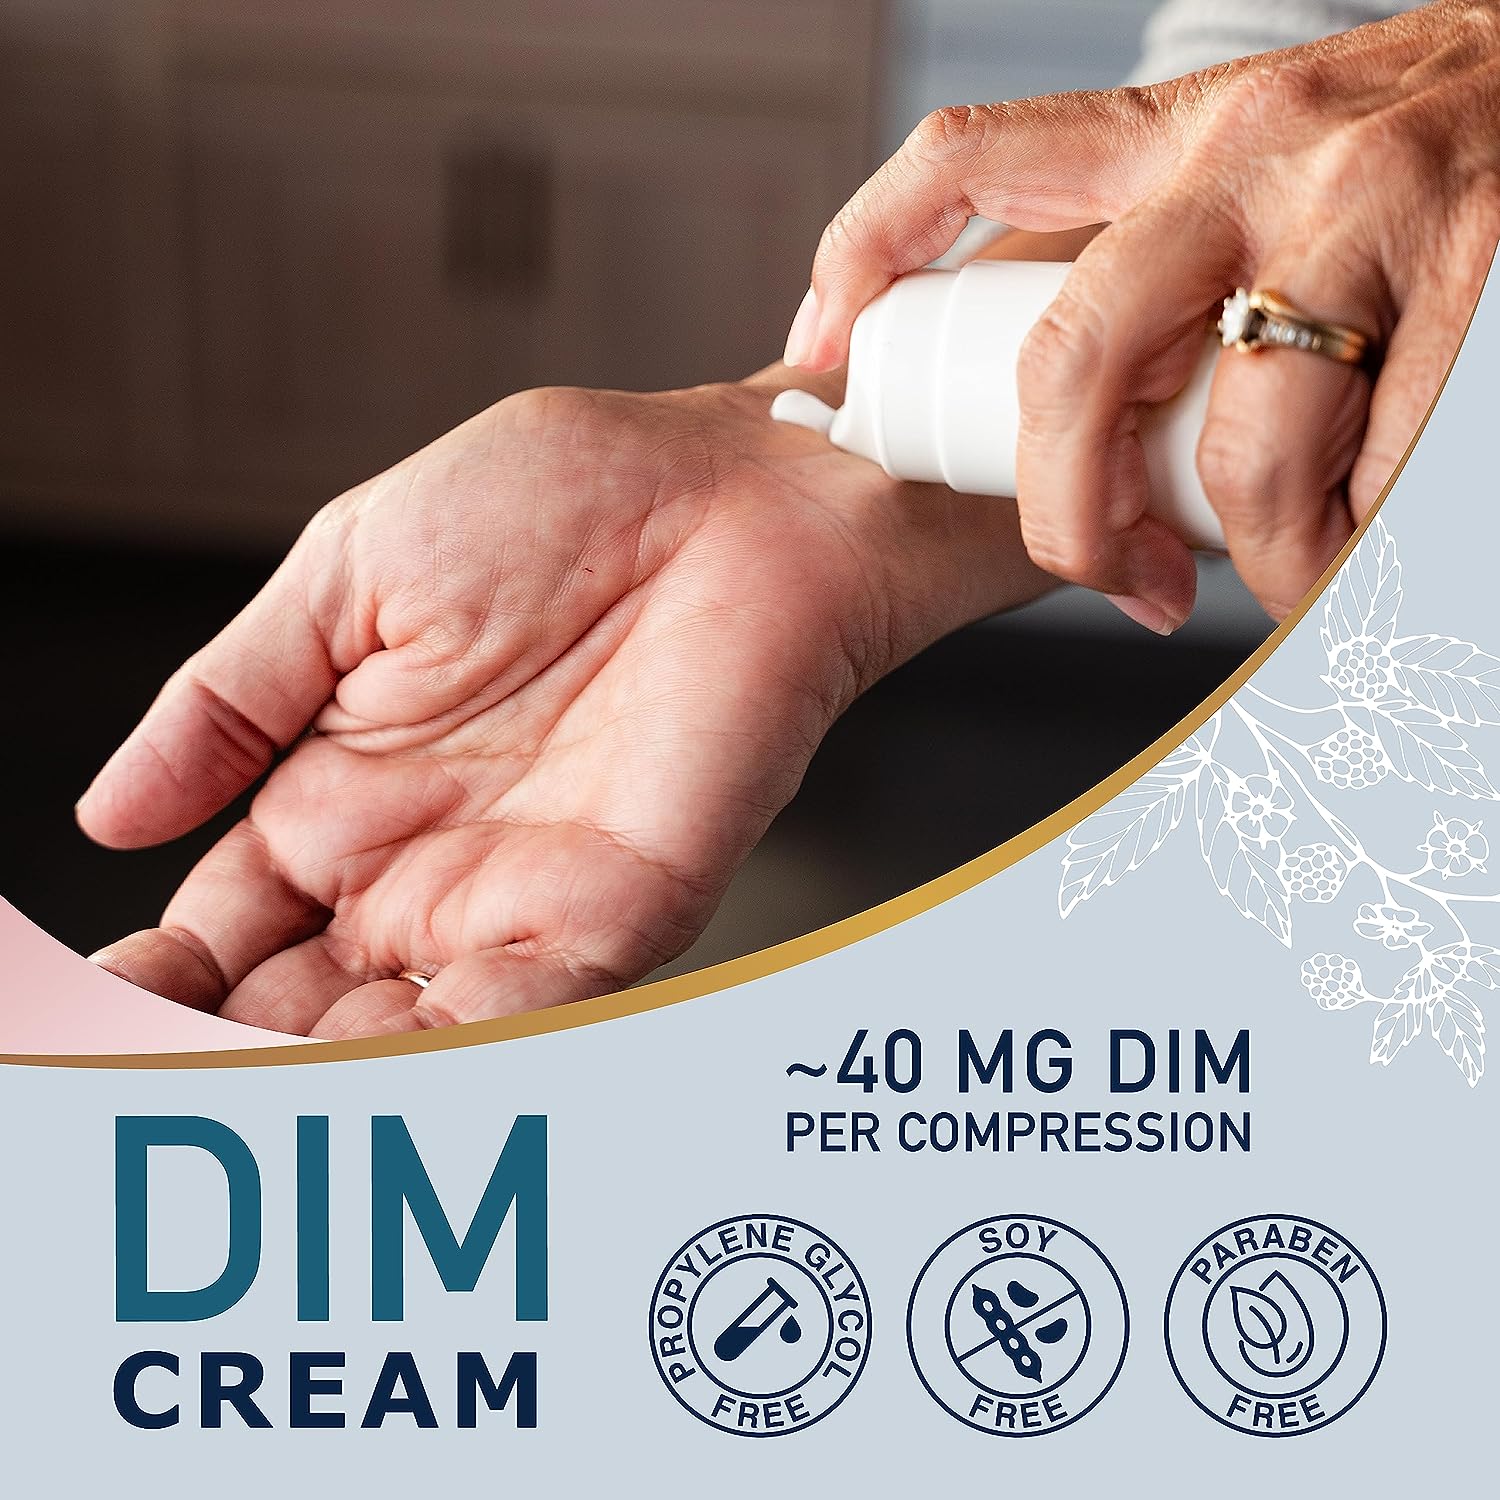 DIM Cream Supplement review